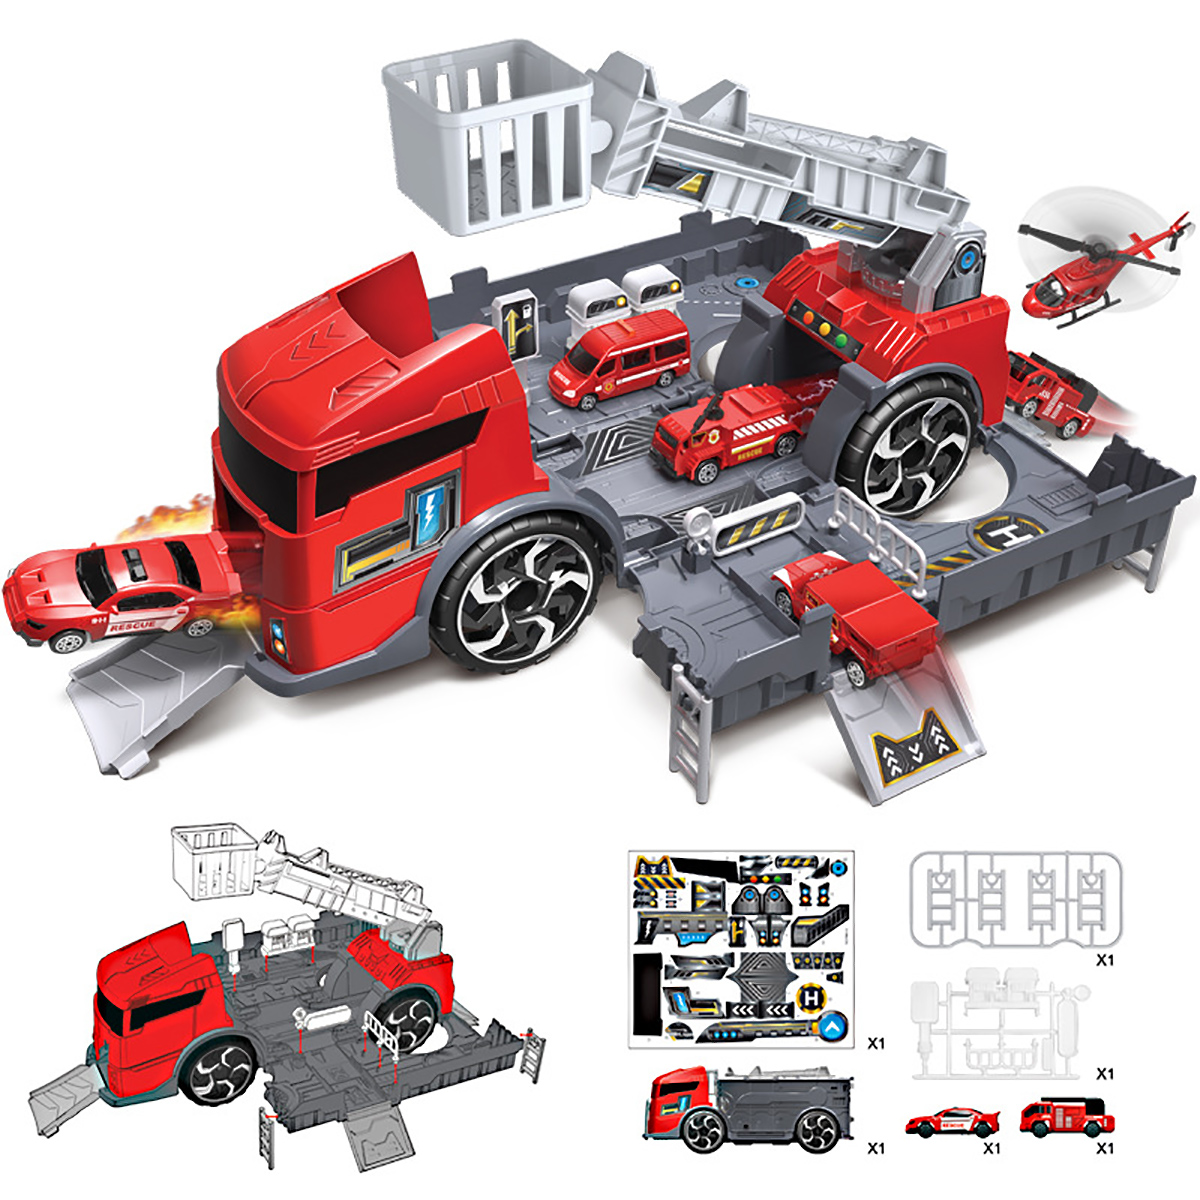 Childrens-Simulation-Diecast-Engineering-Vehicle-Model-Set-Deformation-Storage-Parking-Lot-Education-1555038-5